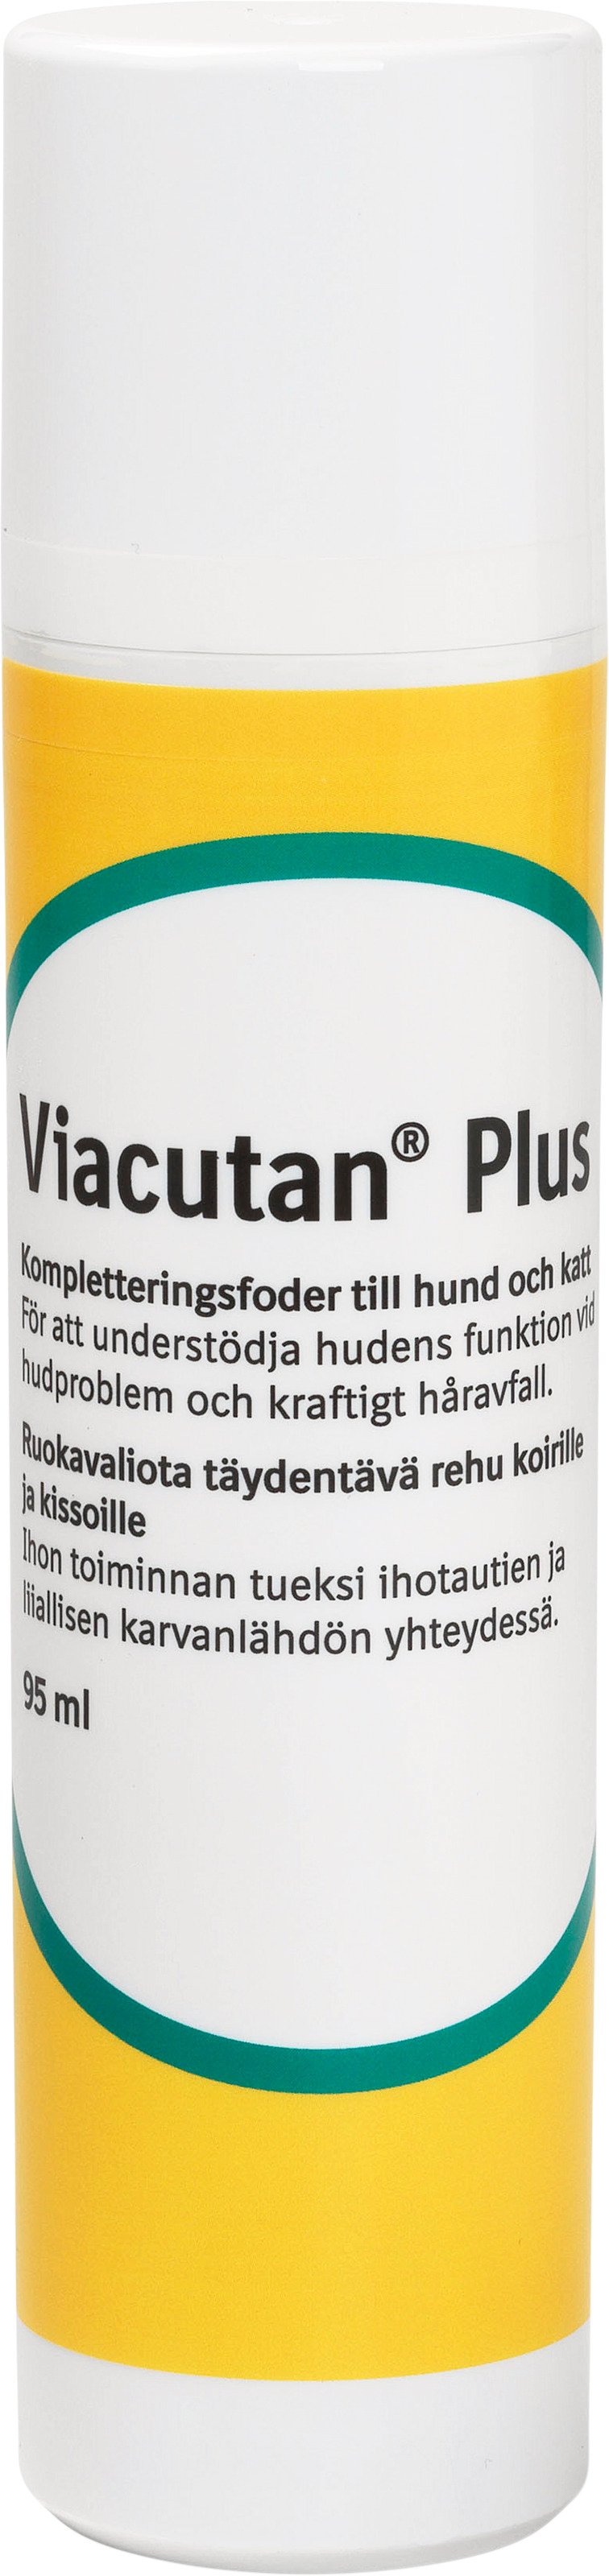 Viacutan Plus Oral lösning i pumpflaska 95 ml